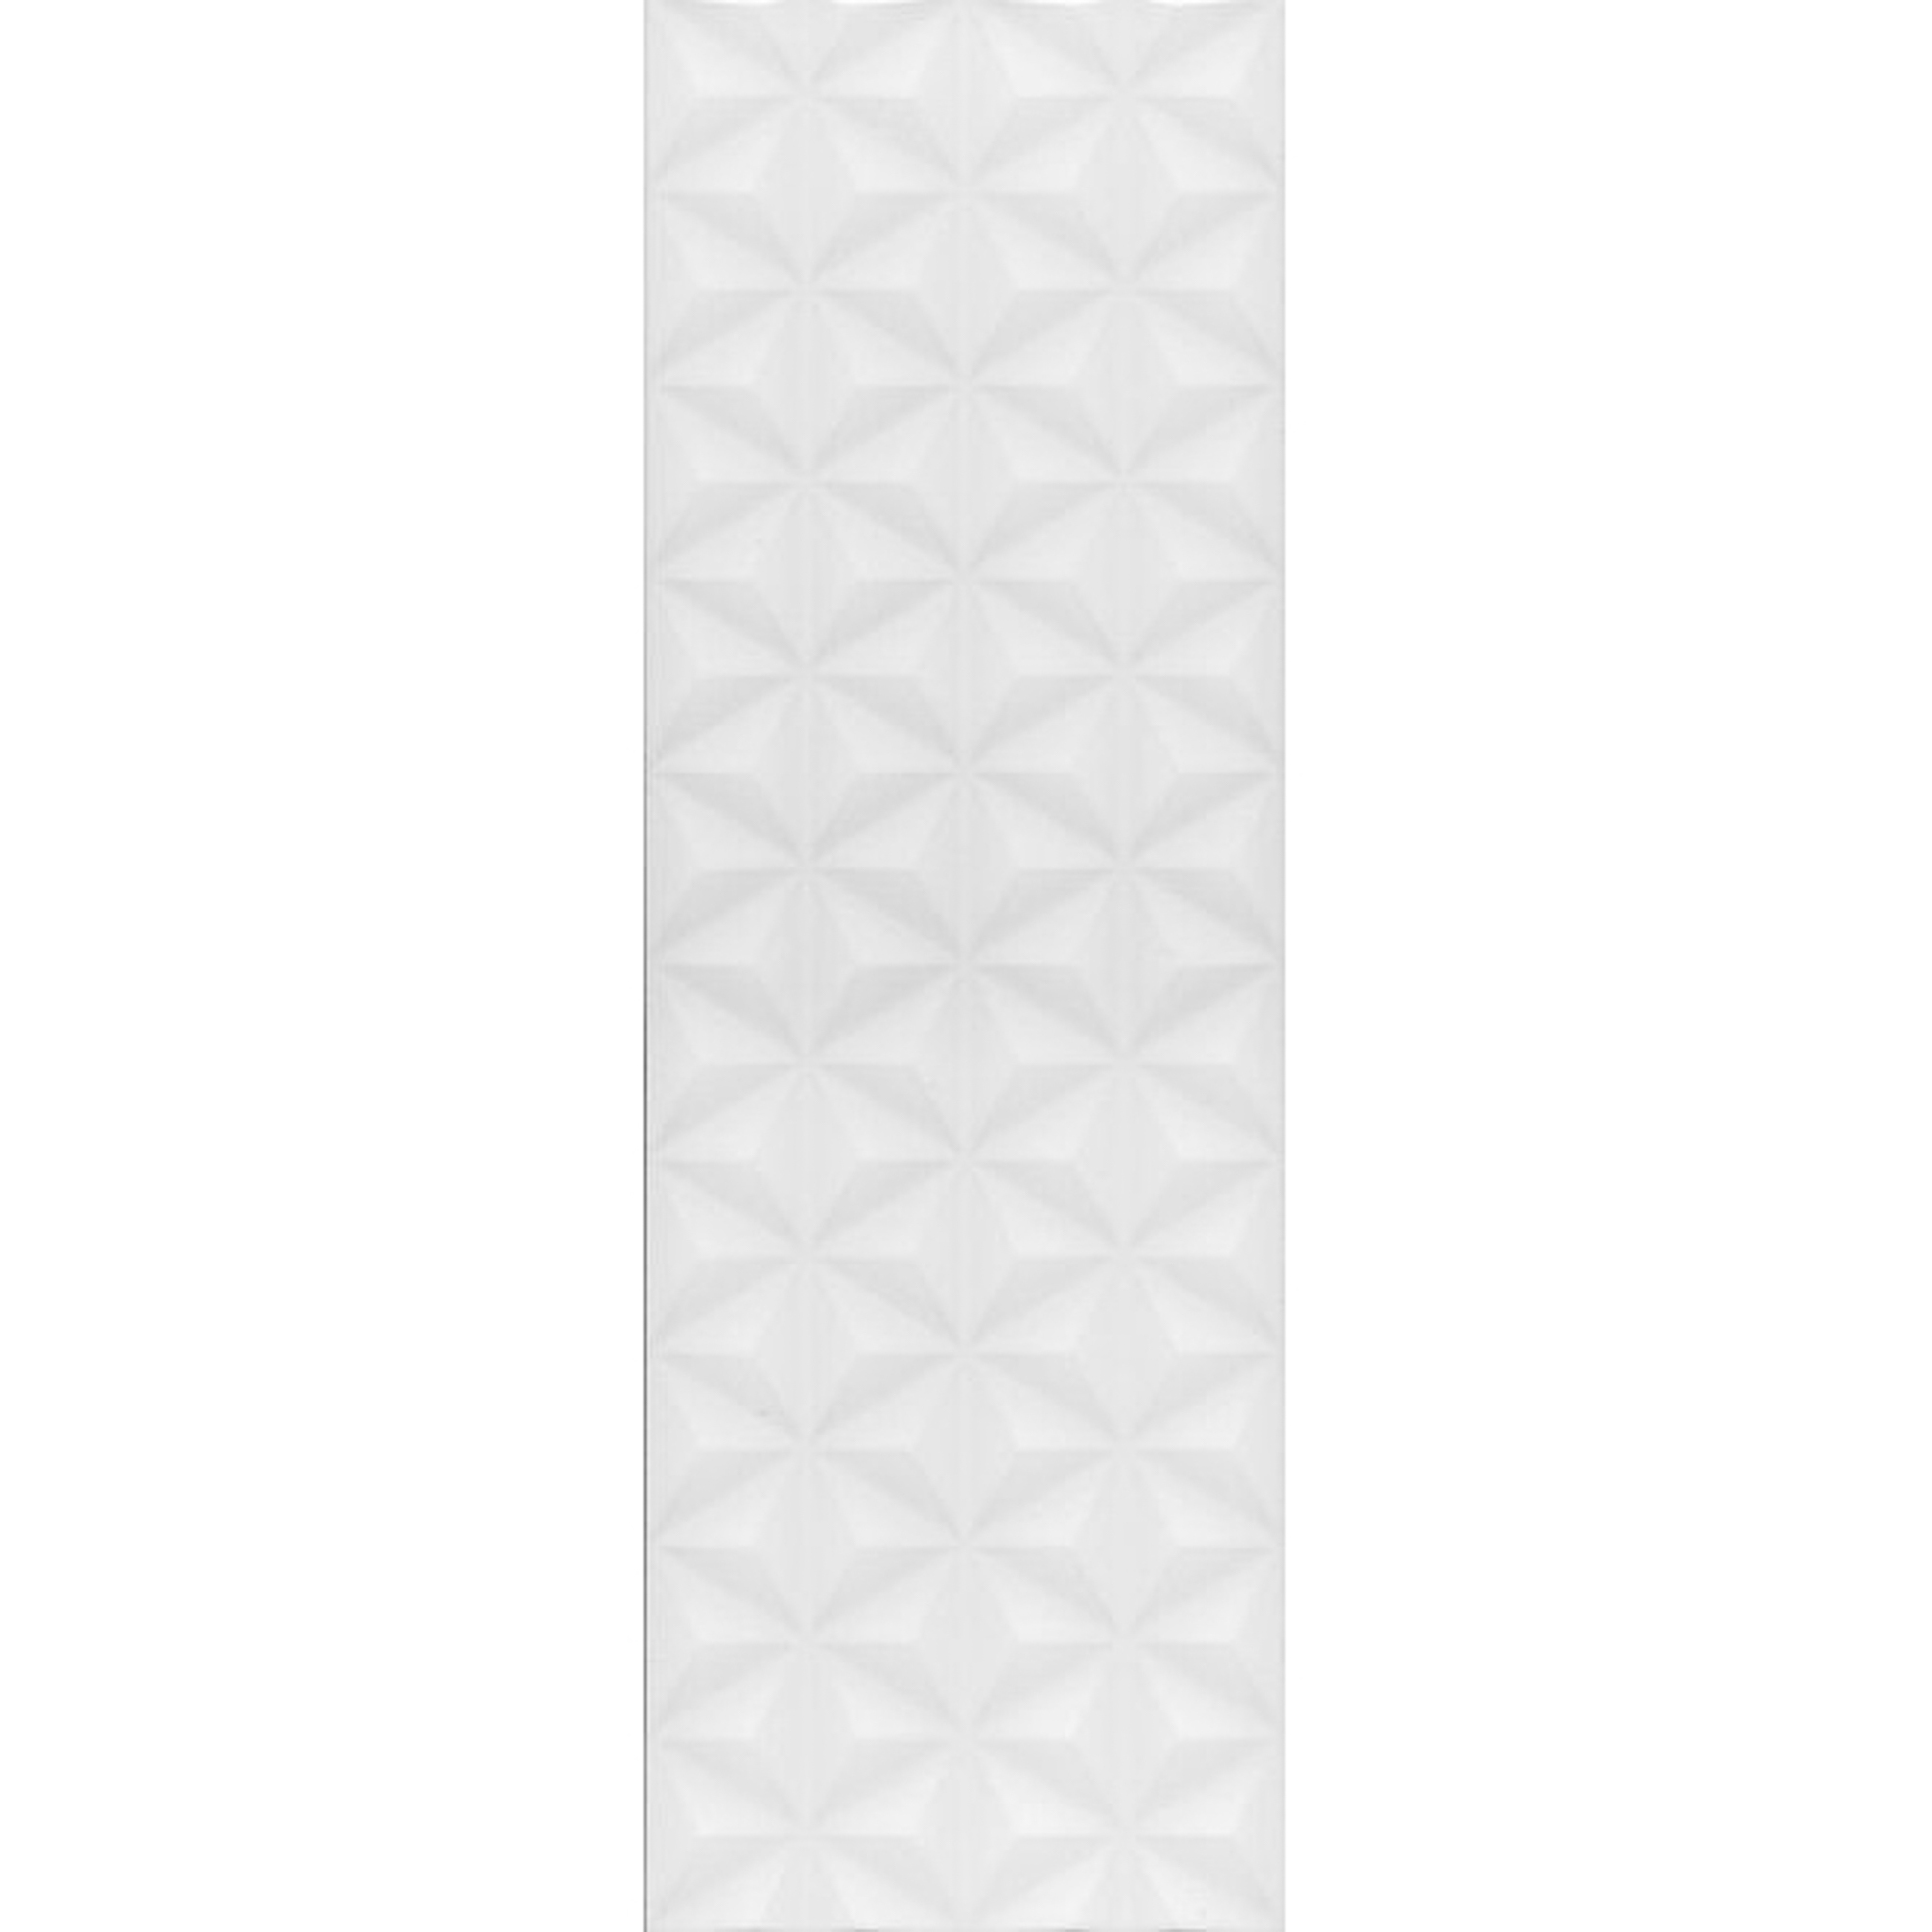 Плитка Kerama Marazzi Диагональ белая структура 25x75 см 12119R плитка kerama marazzi гамма белая 8 5x28 5 см 9001